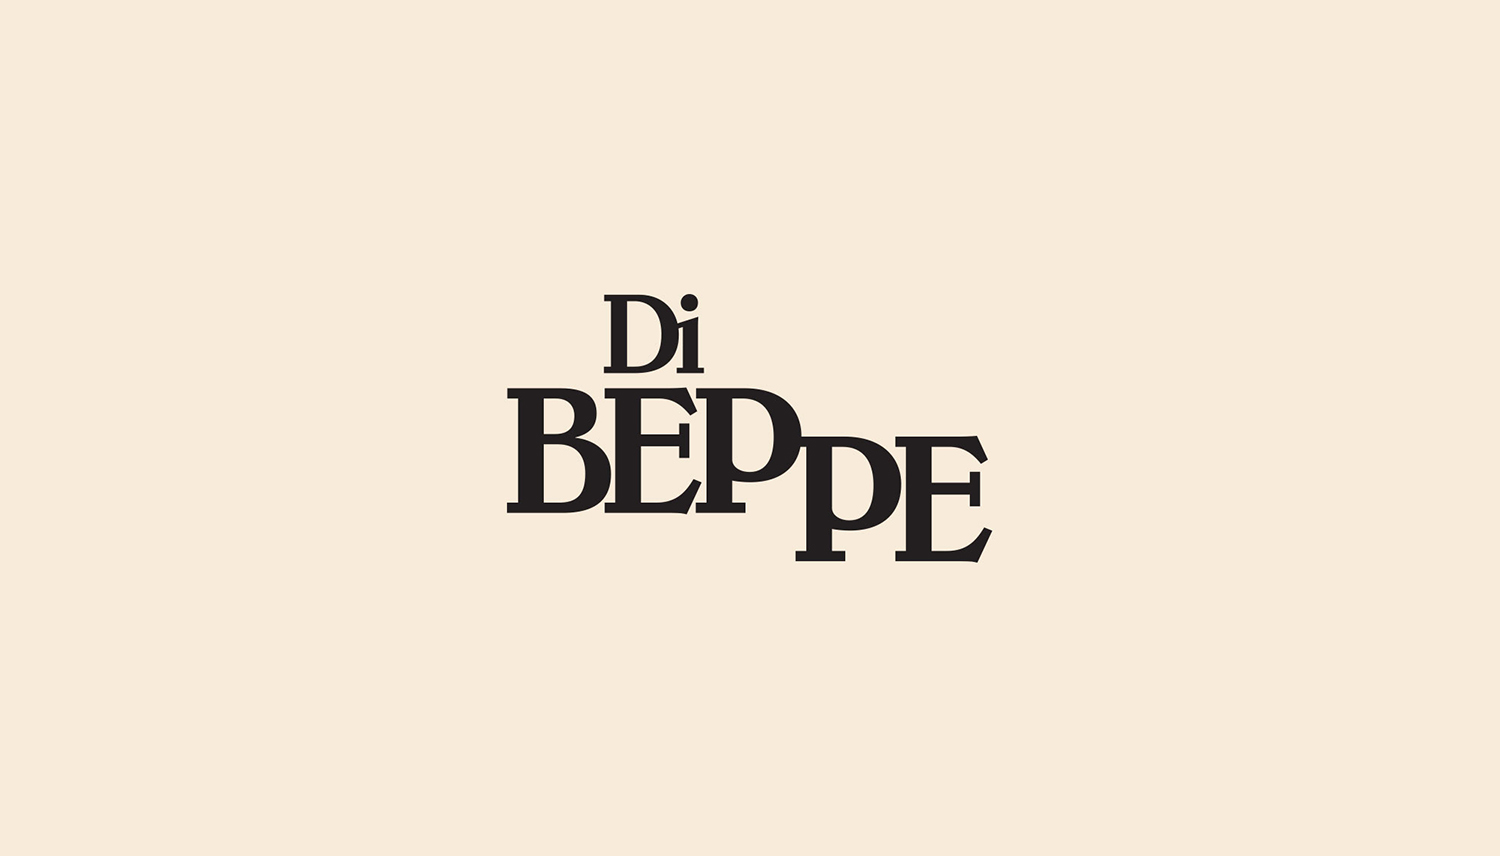 Logo design by Glasfurd & Walker for Italian caffé and ristorante Di Beppe